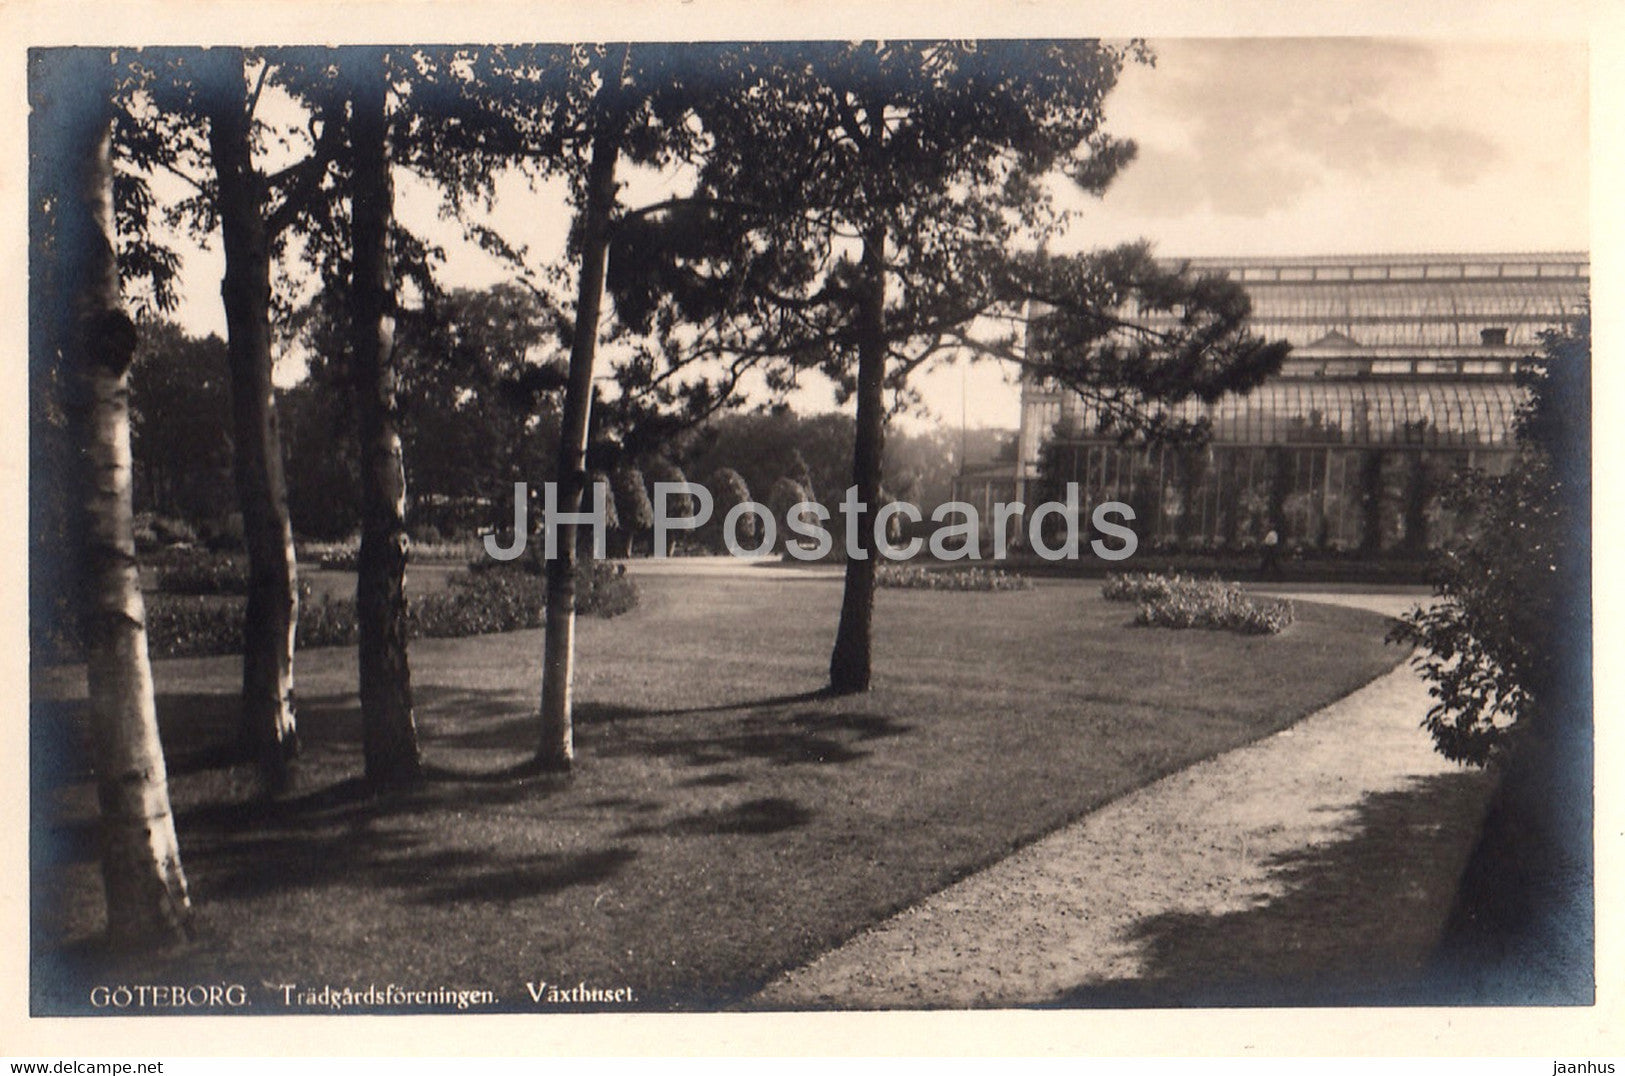 Goteborg - Tradgardsforeningen - Vaxthuset - old postcard - Sweden - unused - JH Postcards